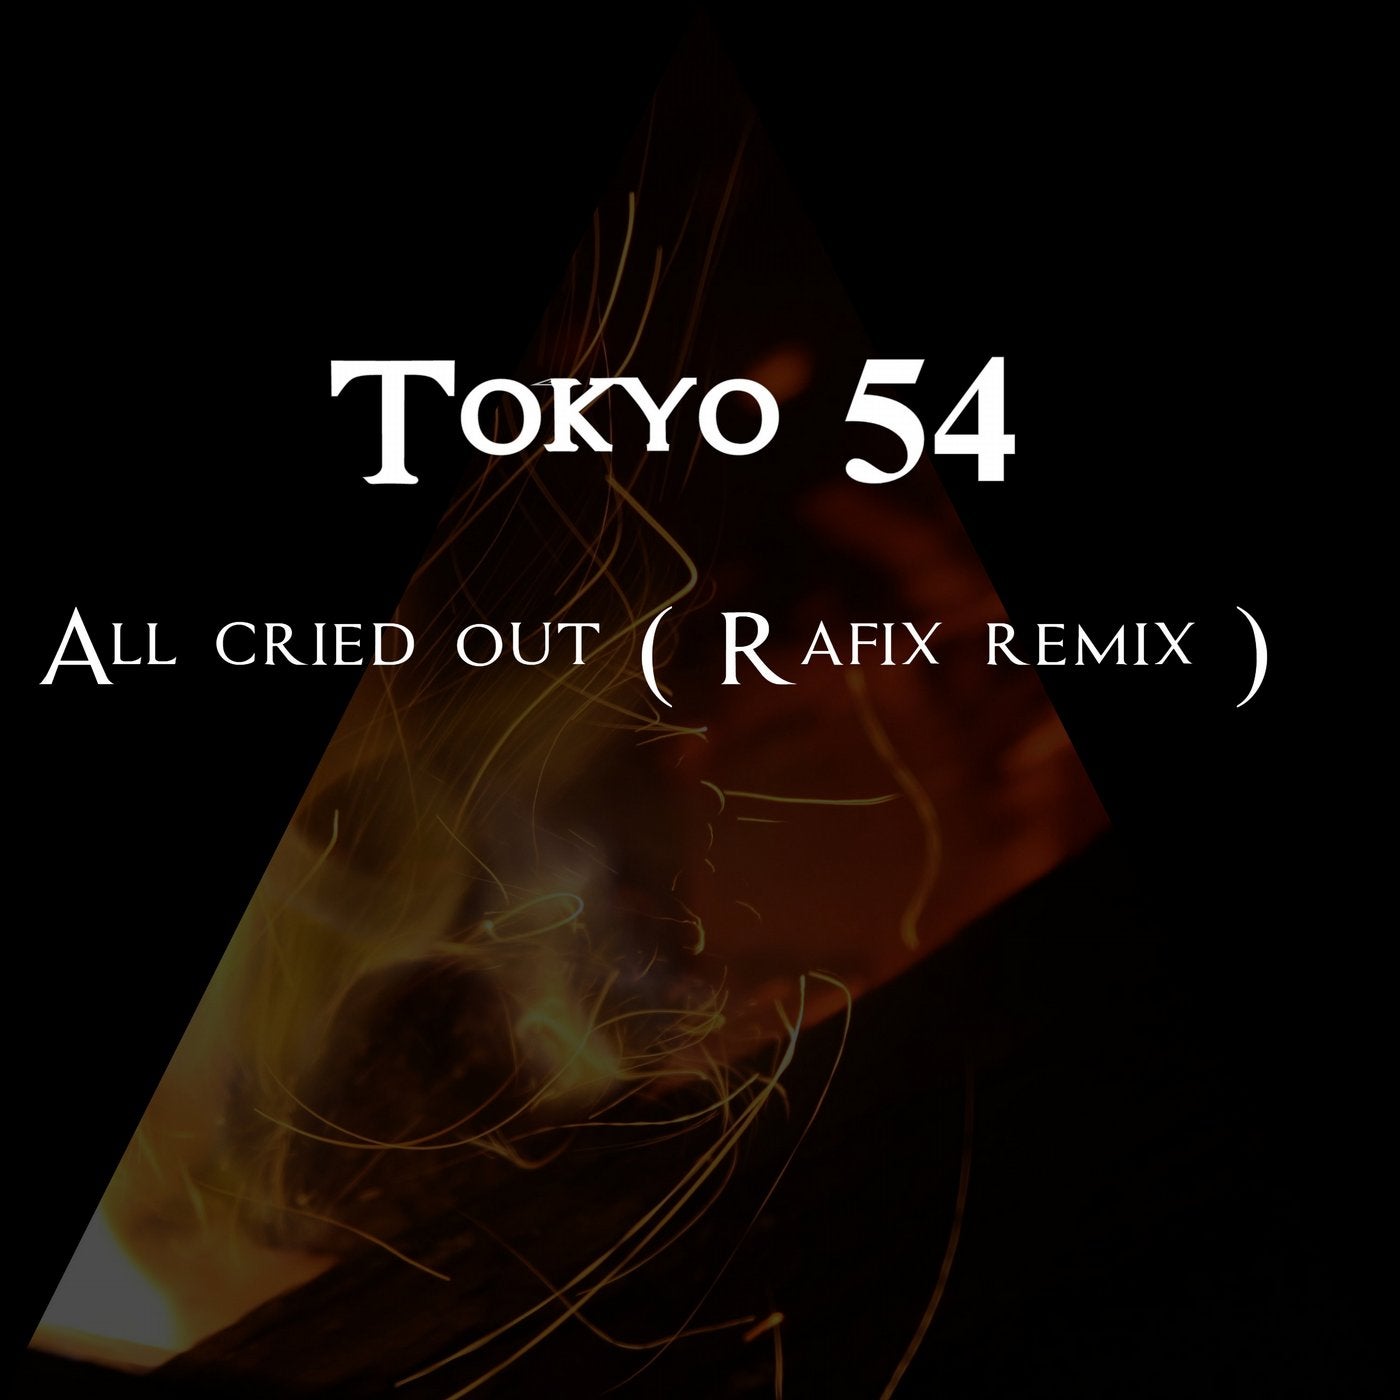 All cried out ( Rafix remix )